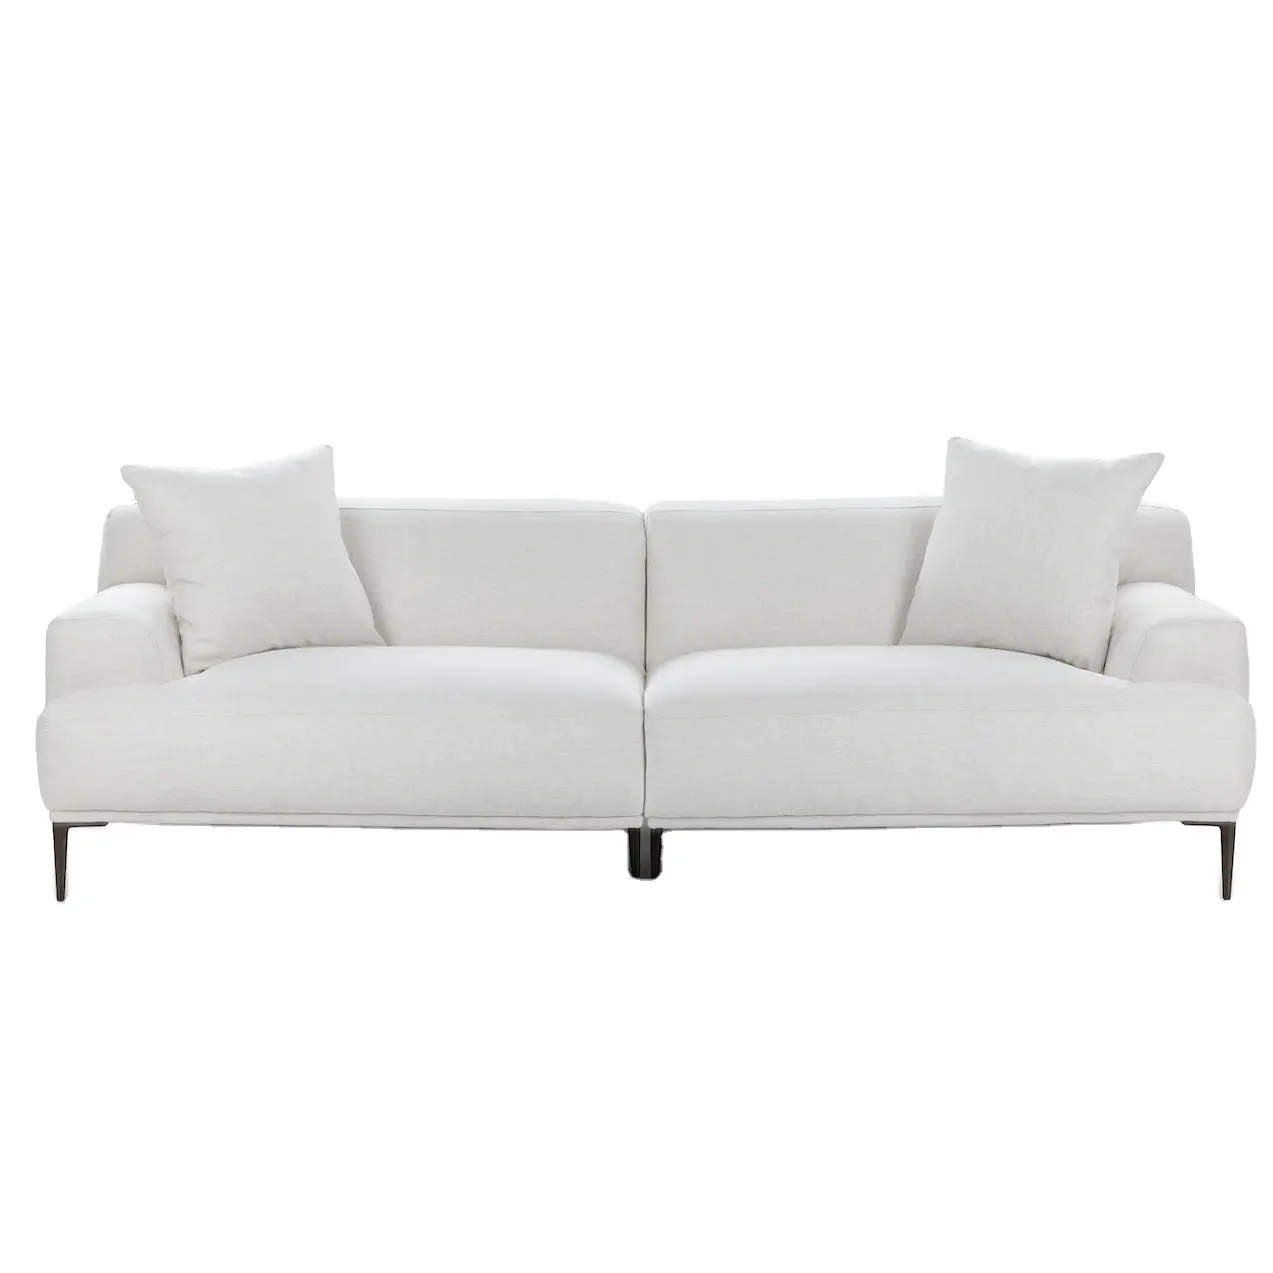 Italy Simple Designs Multifunctional Sofa Living Room Furniture Fabric Material Sofa